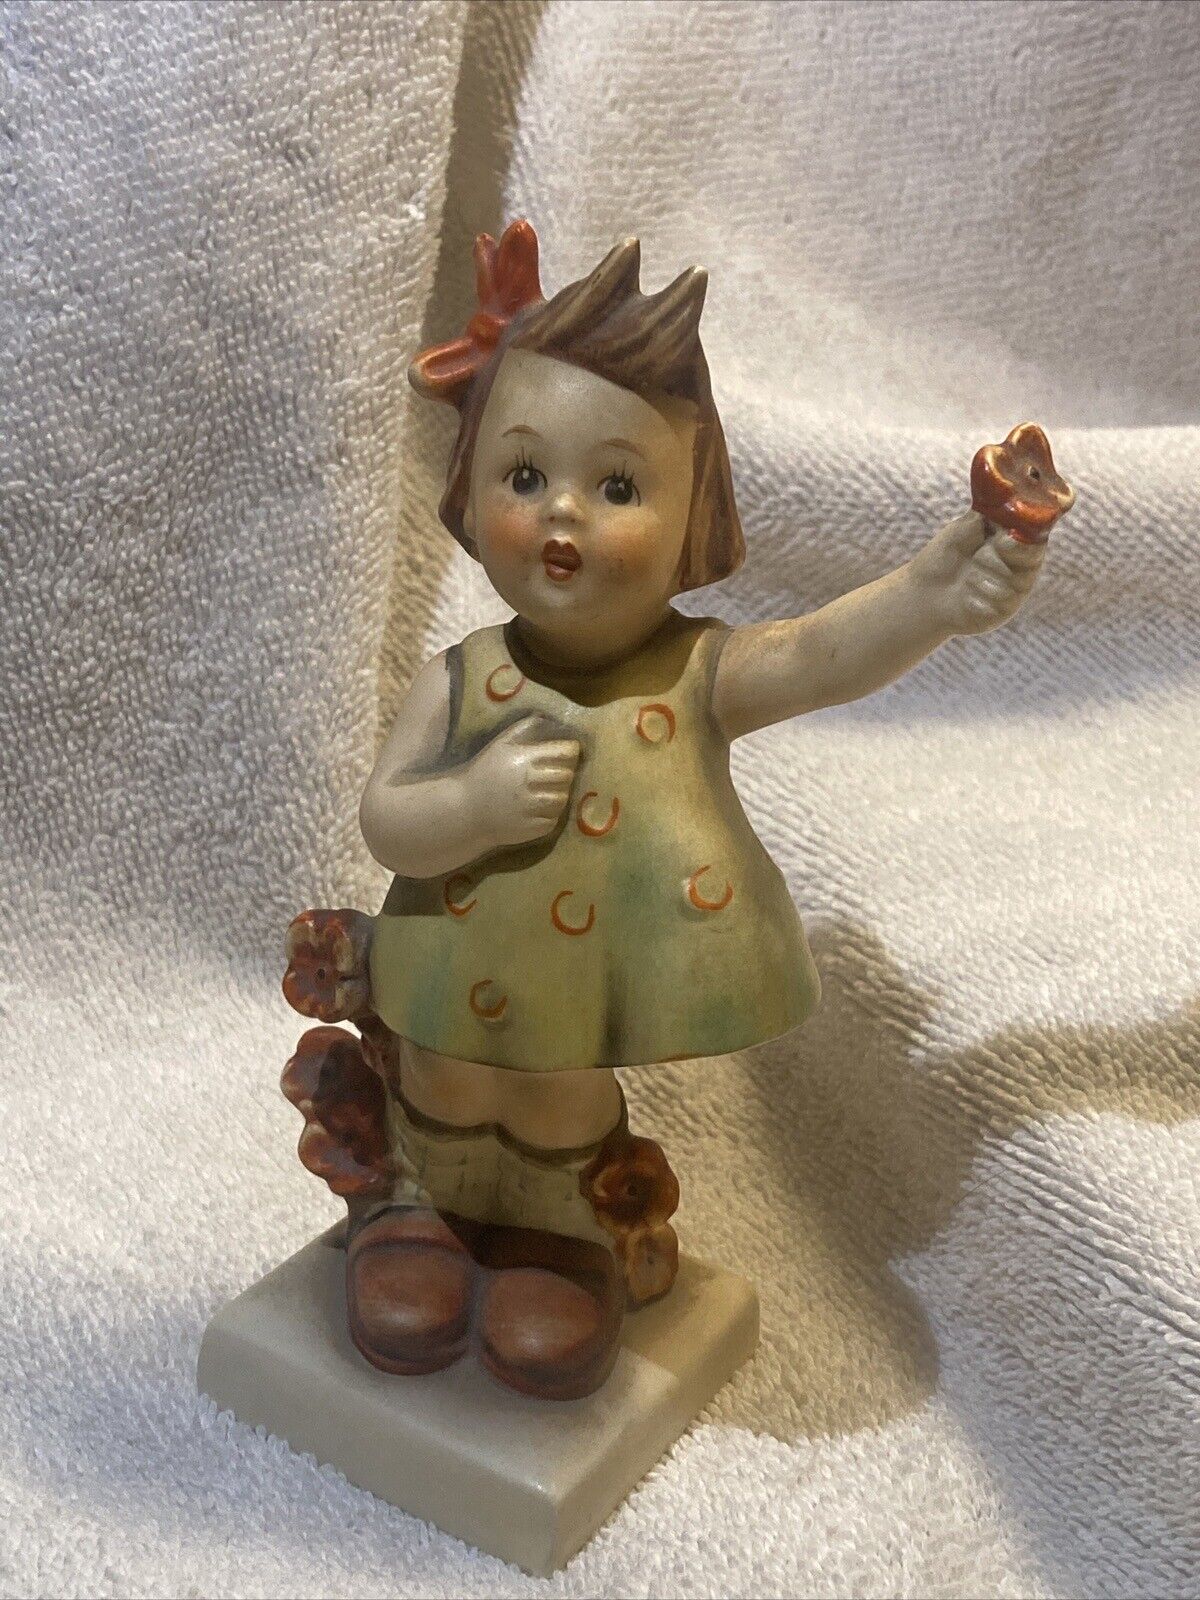 Goebel Hummel “Spring Cheer” 1972 Germany Figurine